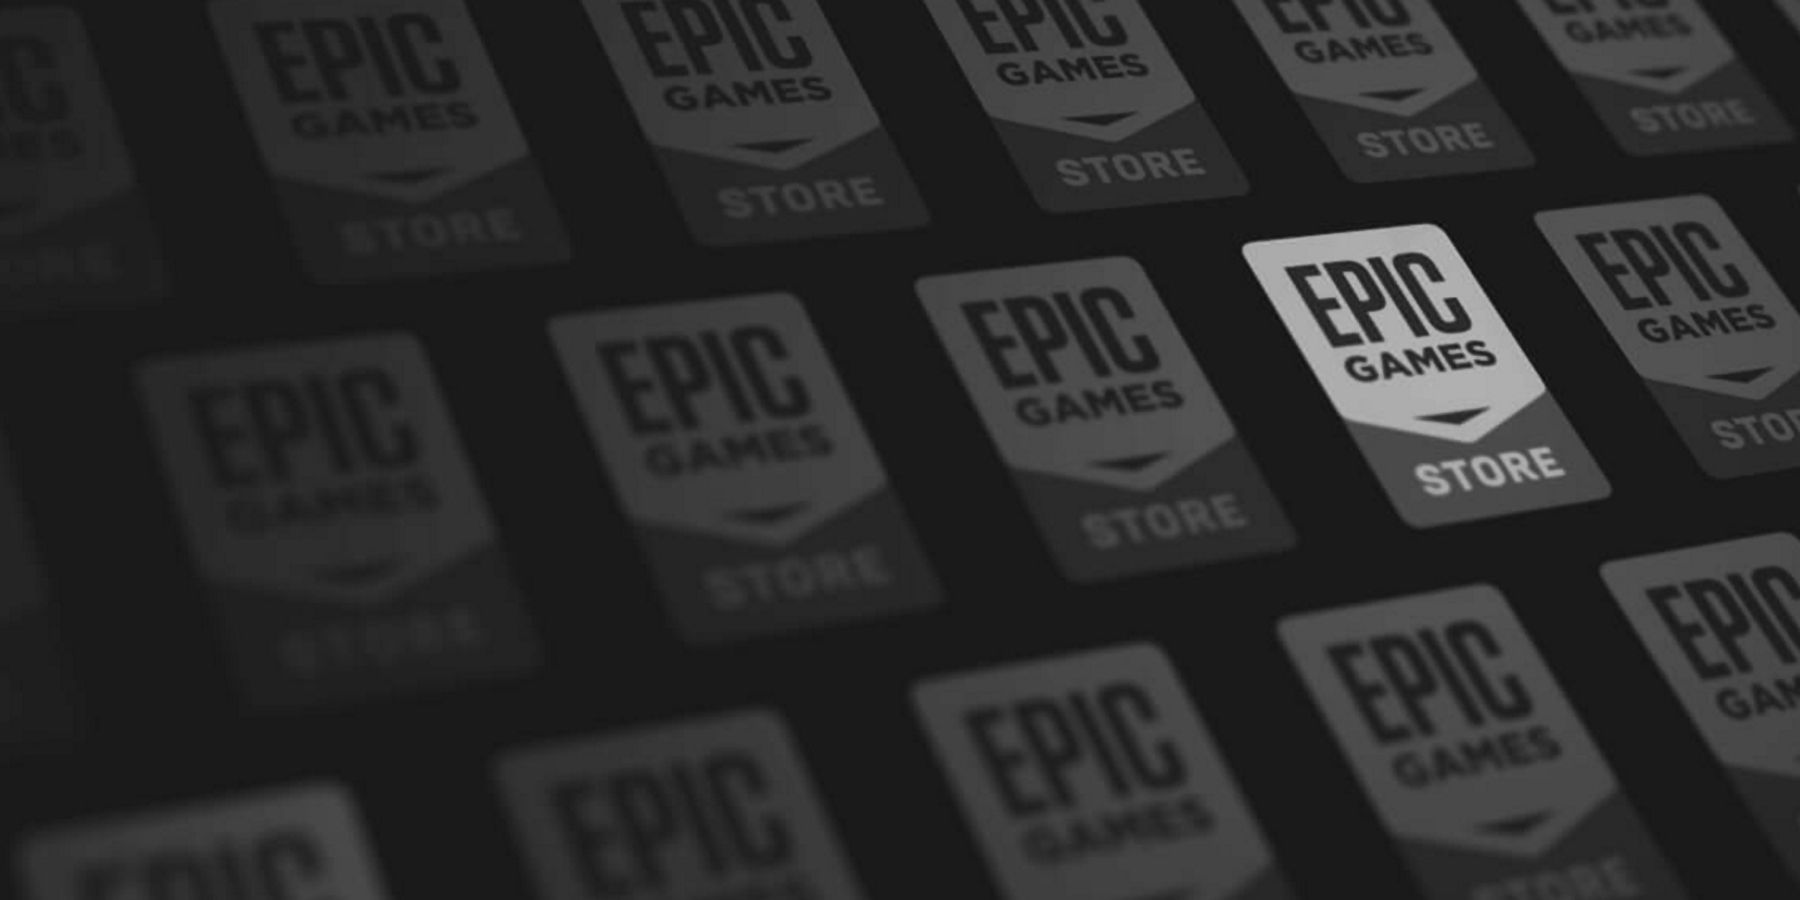 epic games store logo pattern